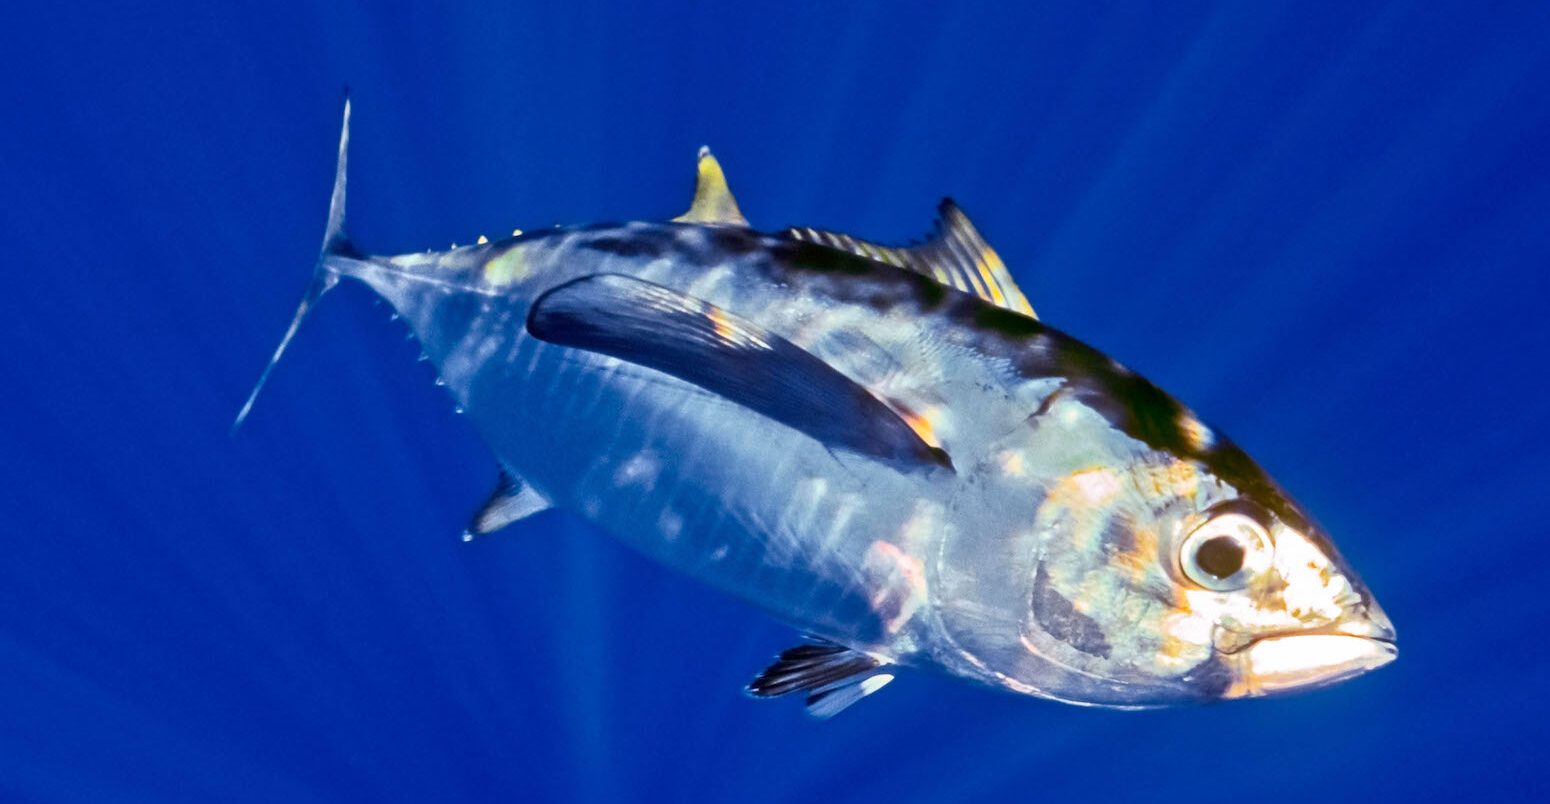 The Juvenile Bigeye Tuna (Thunnus obesus) photographed in Big Island, Hawaii.